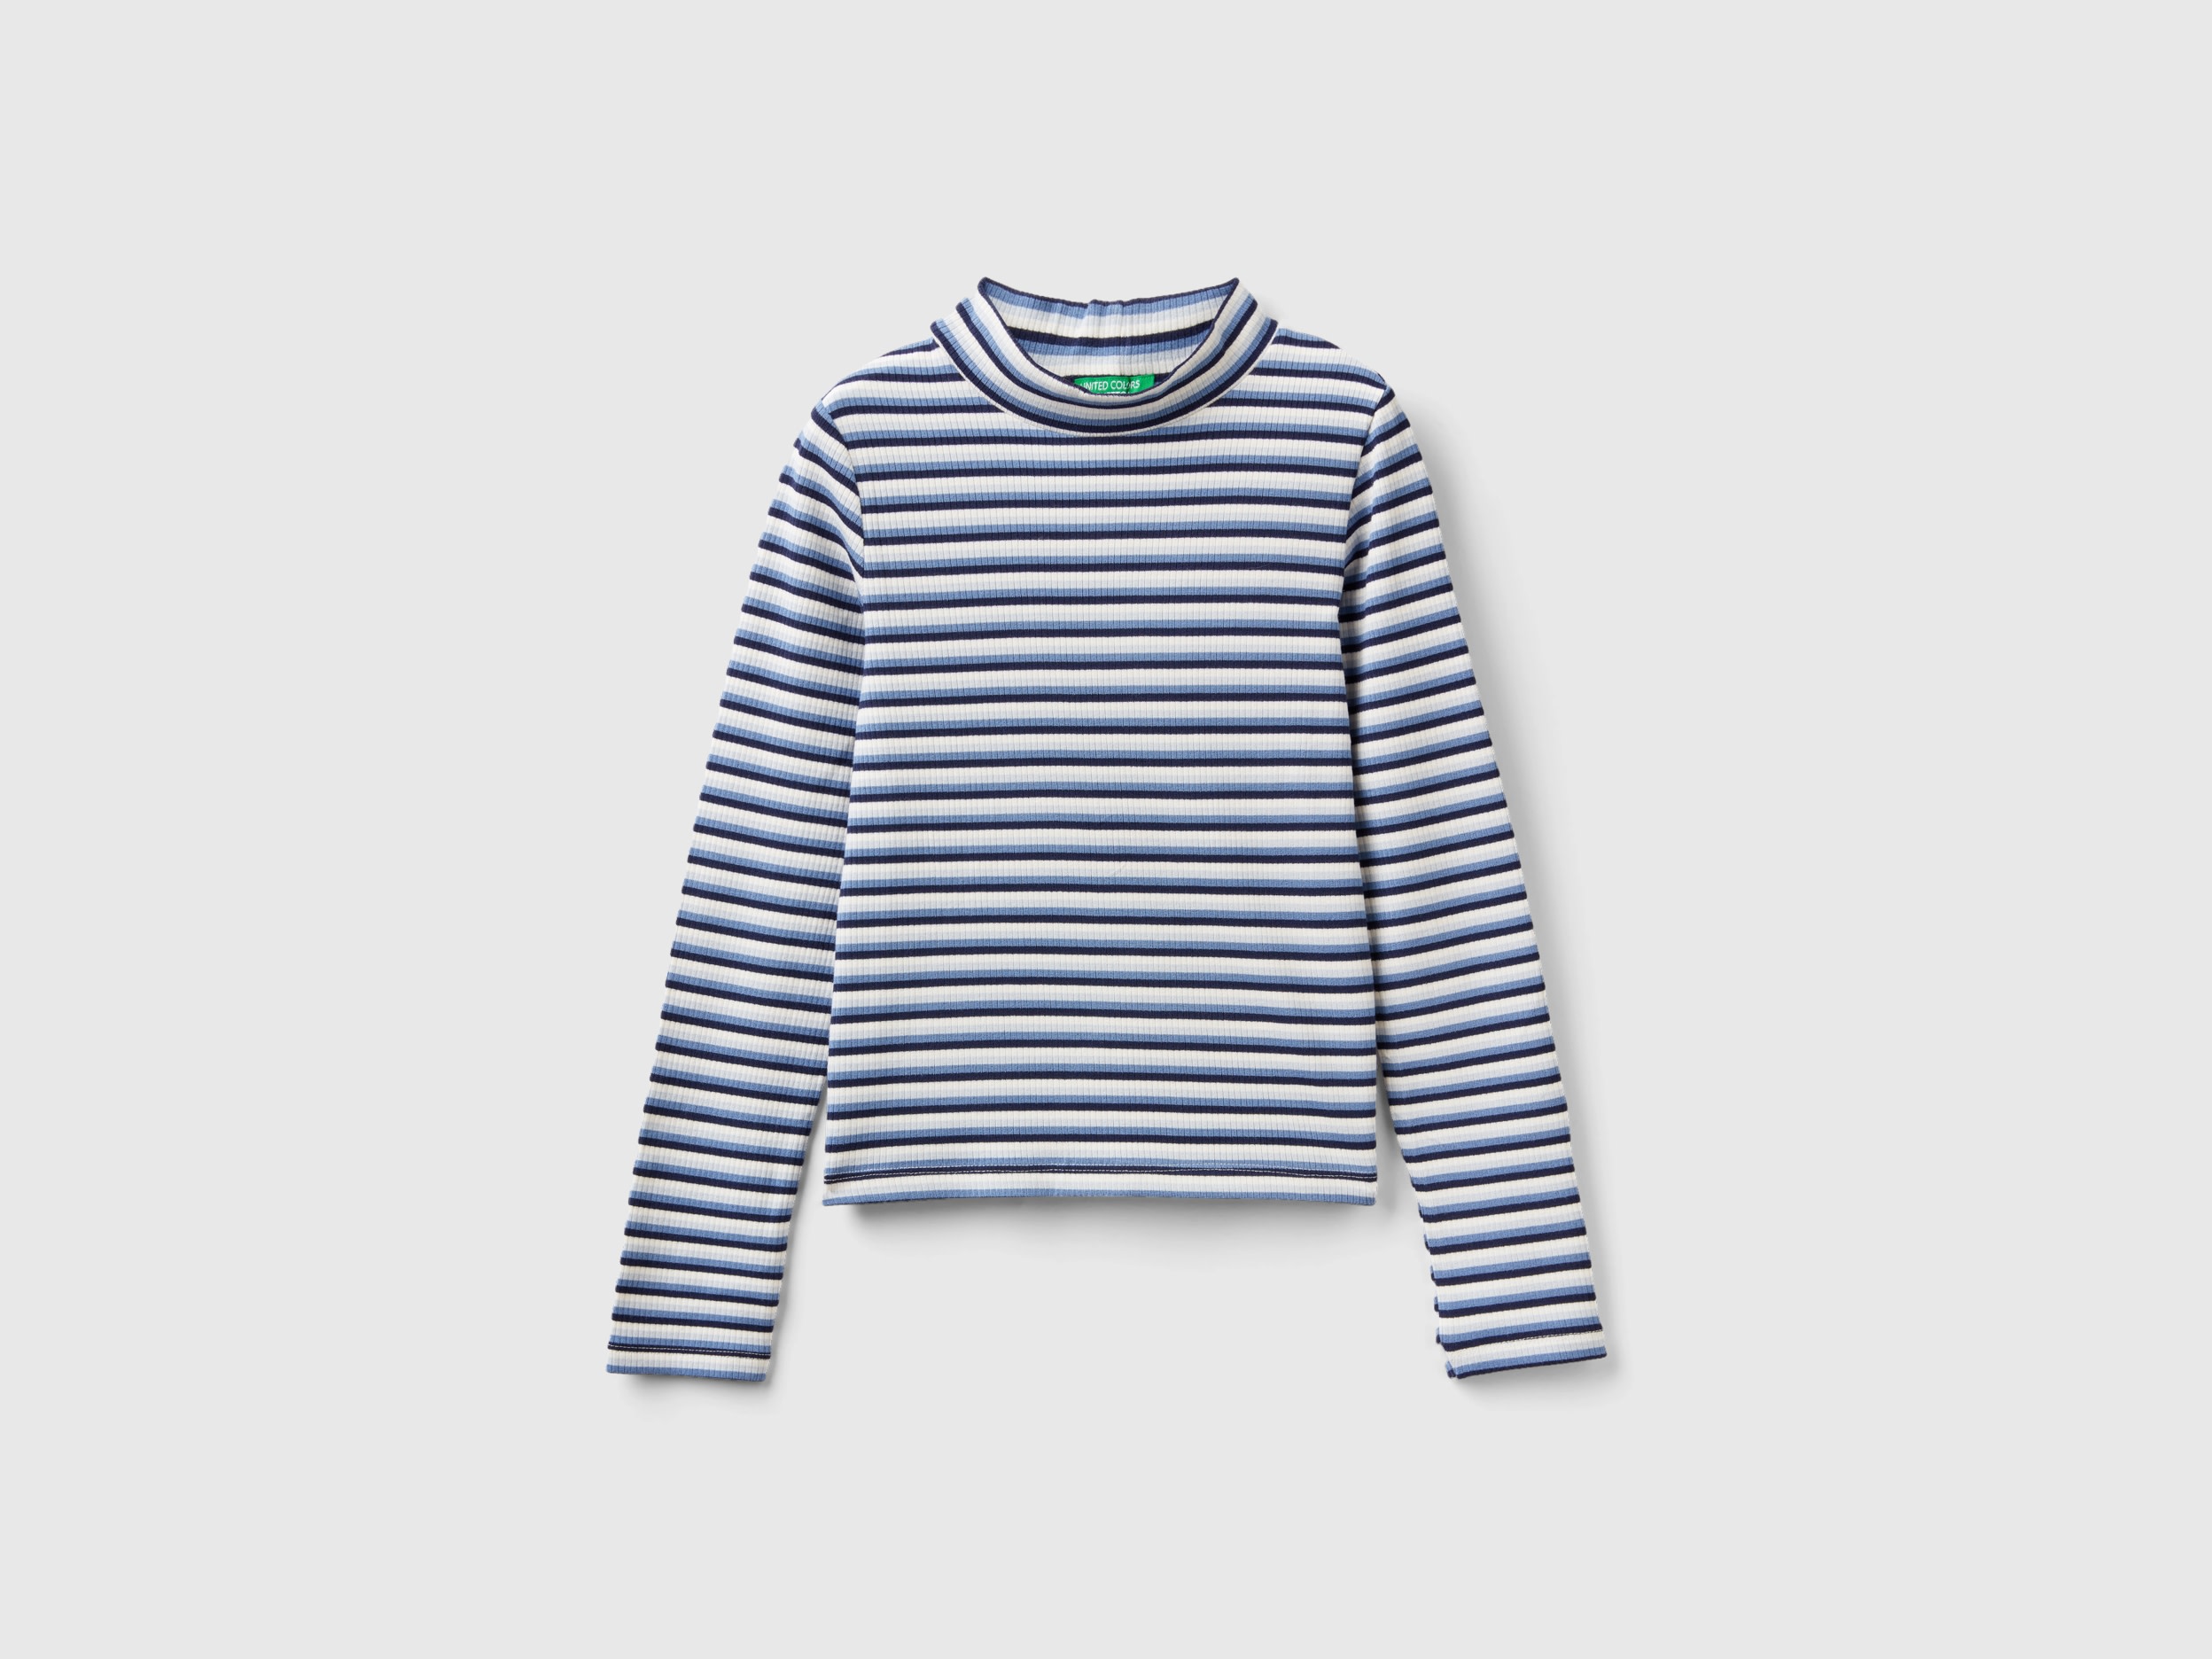 Benetton, Striped Turtleneck T-shirt, size S, Multi-color, Kids